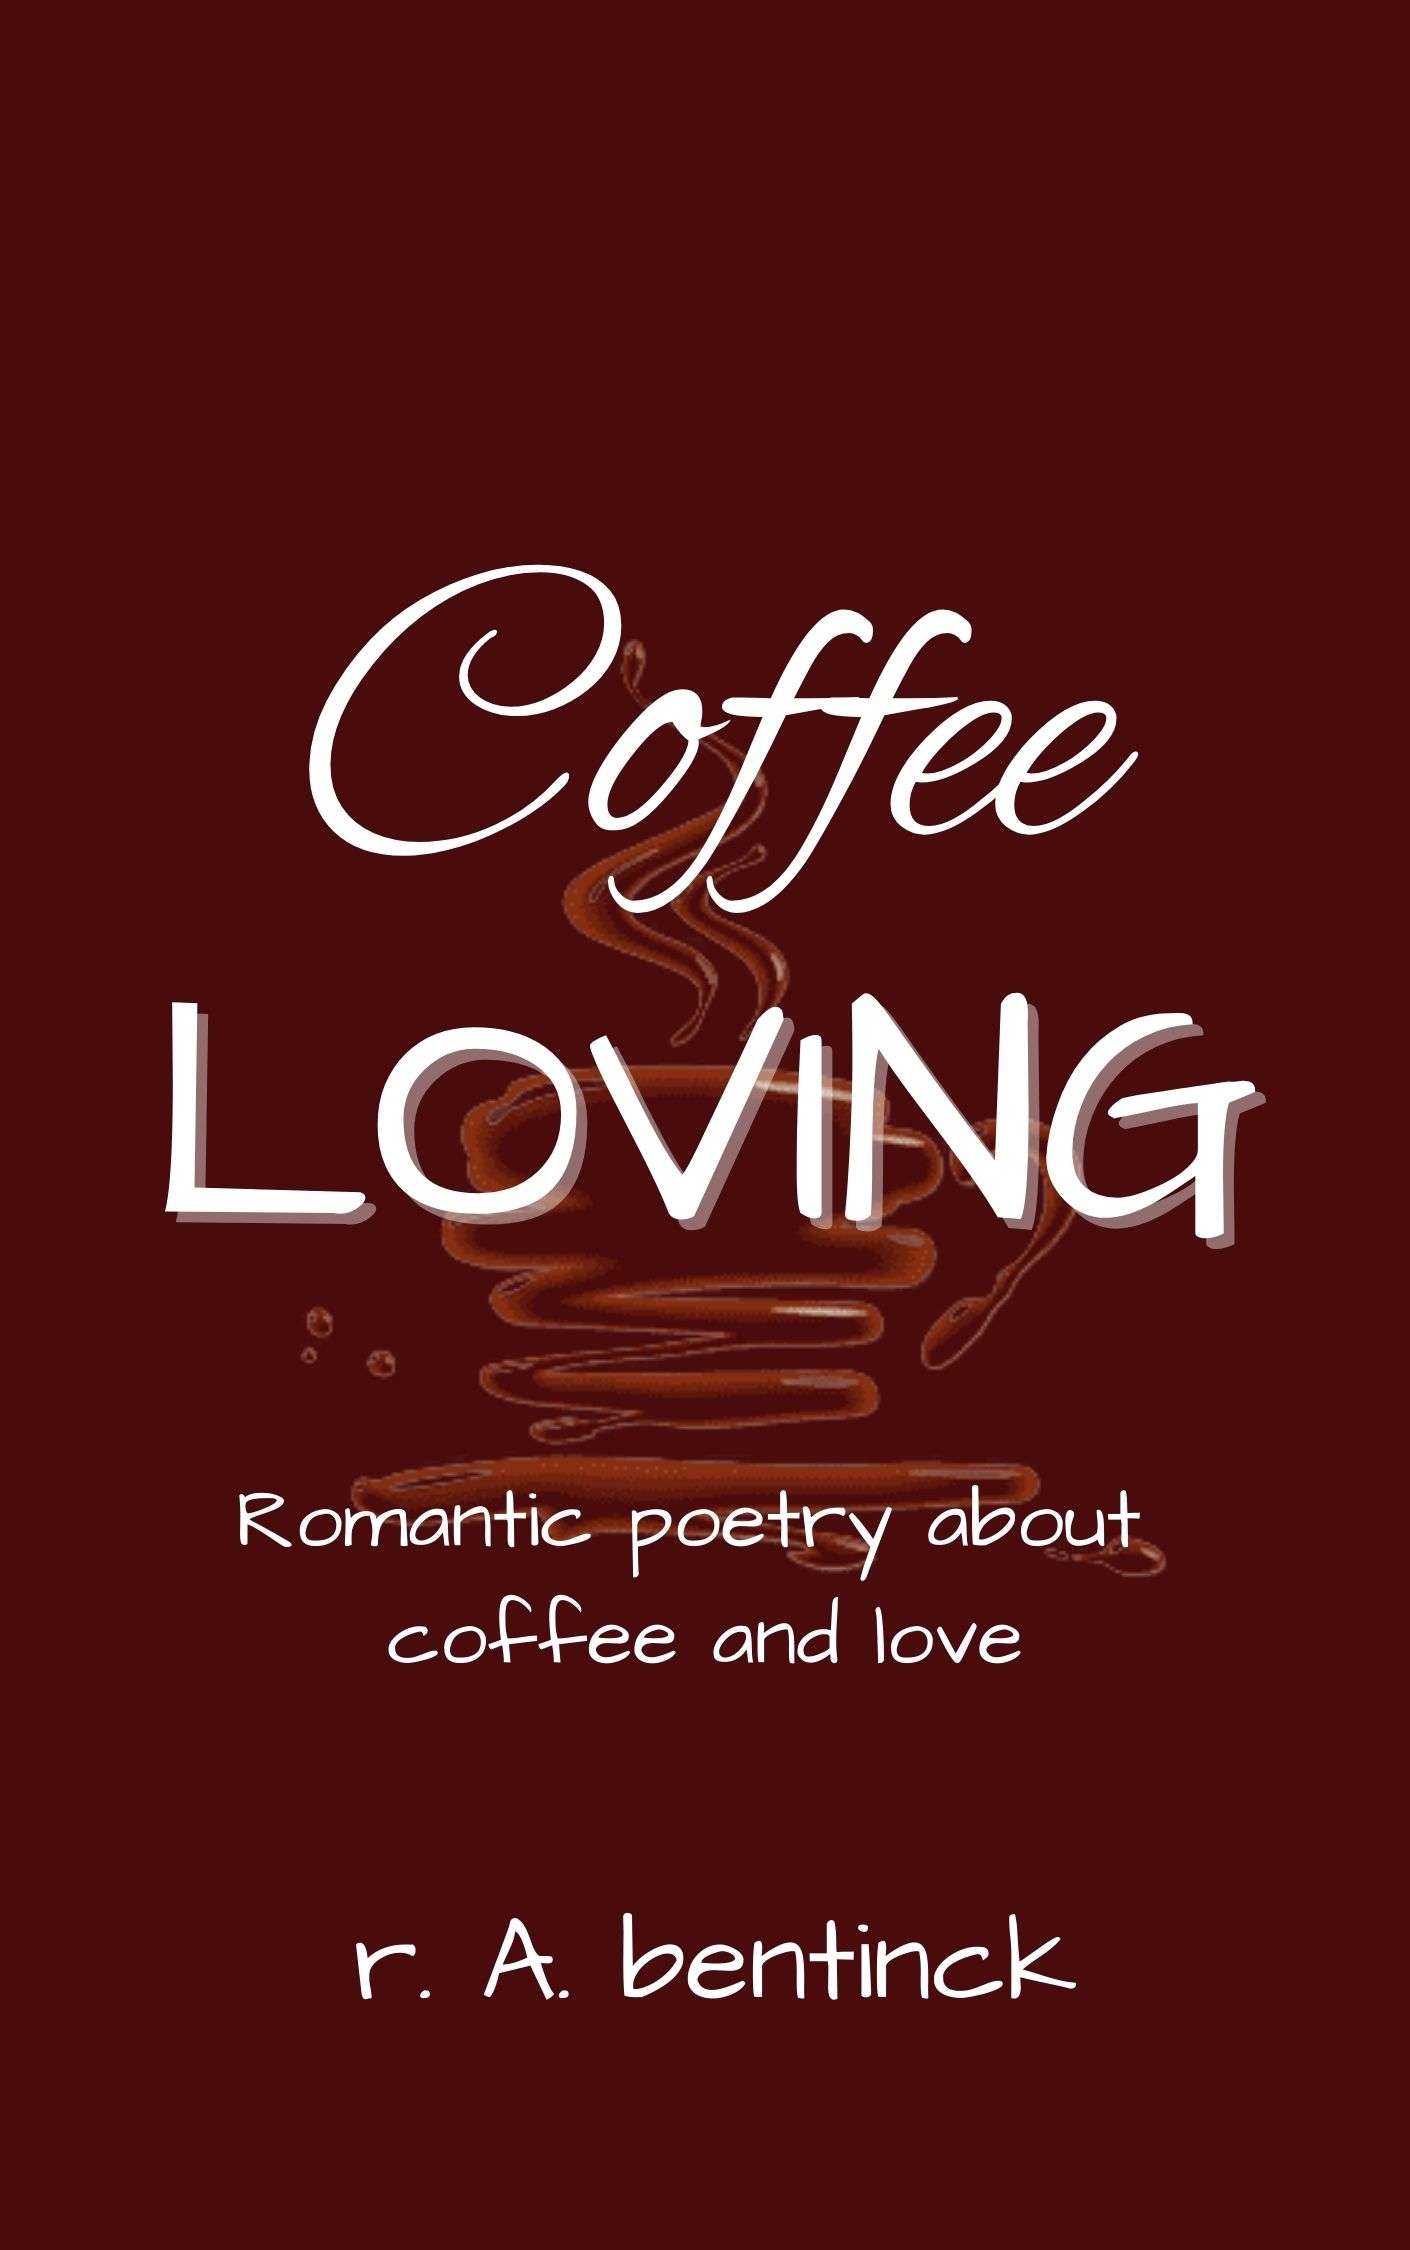 Coffee loving